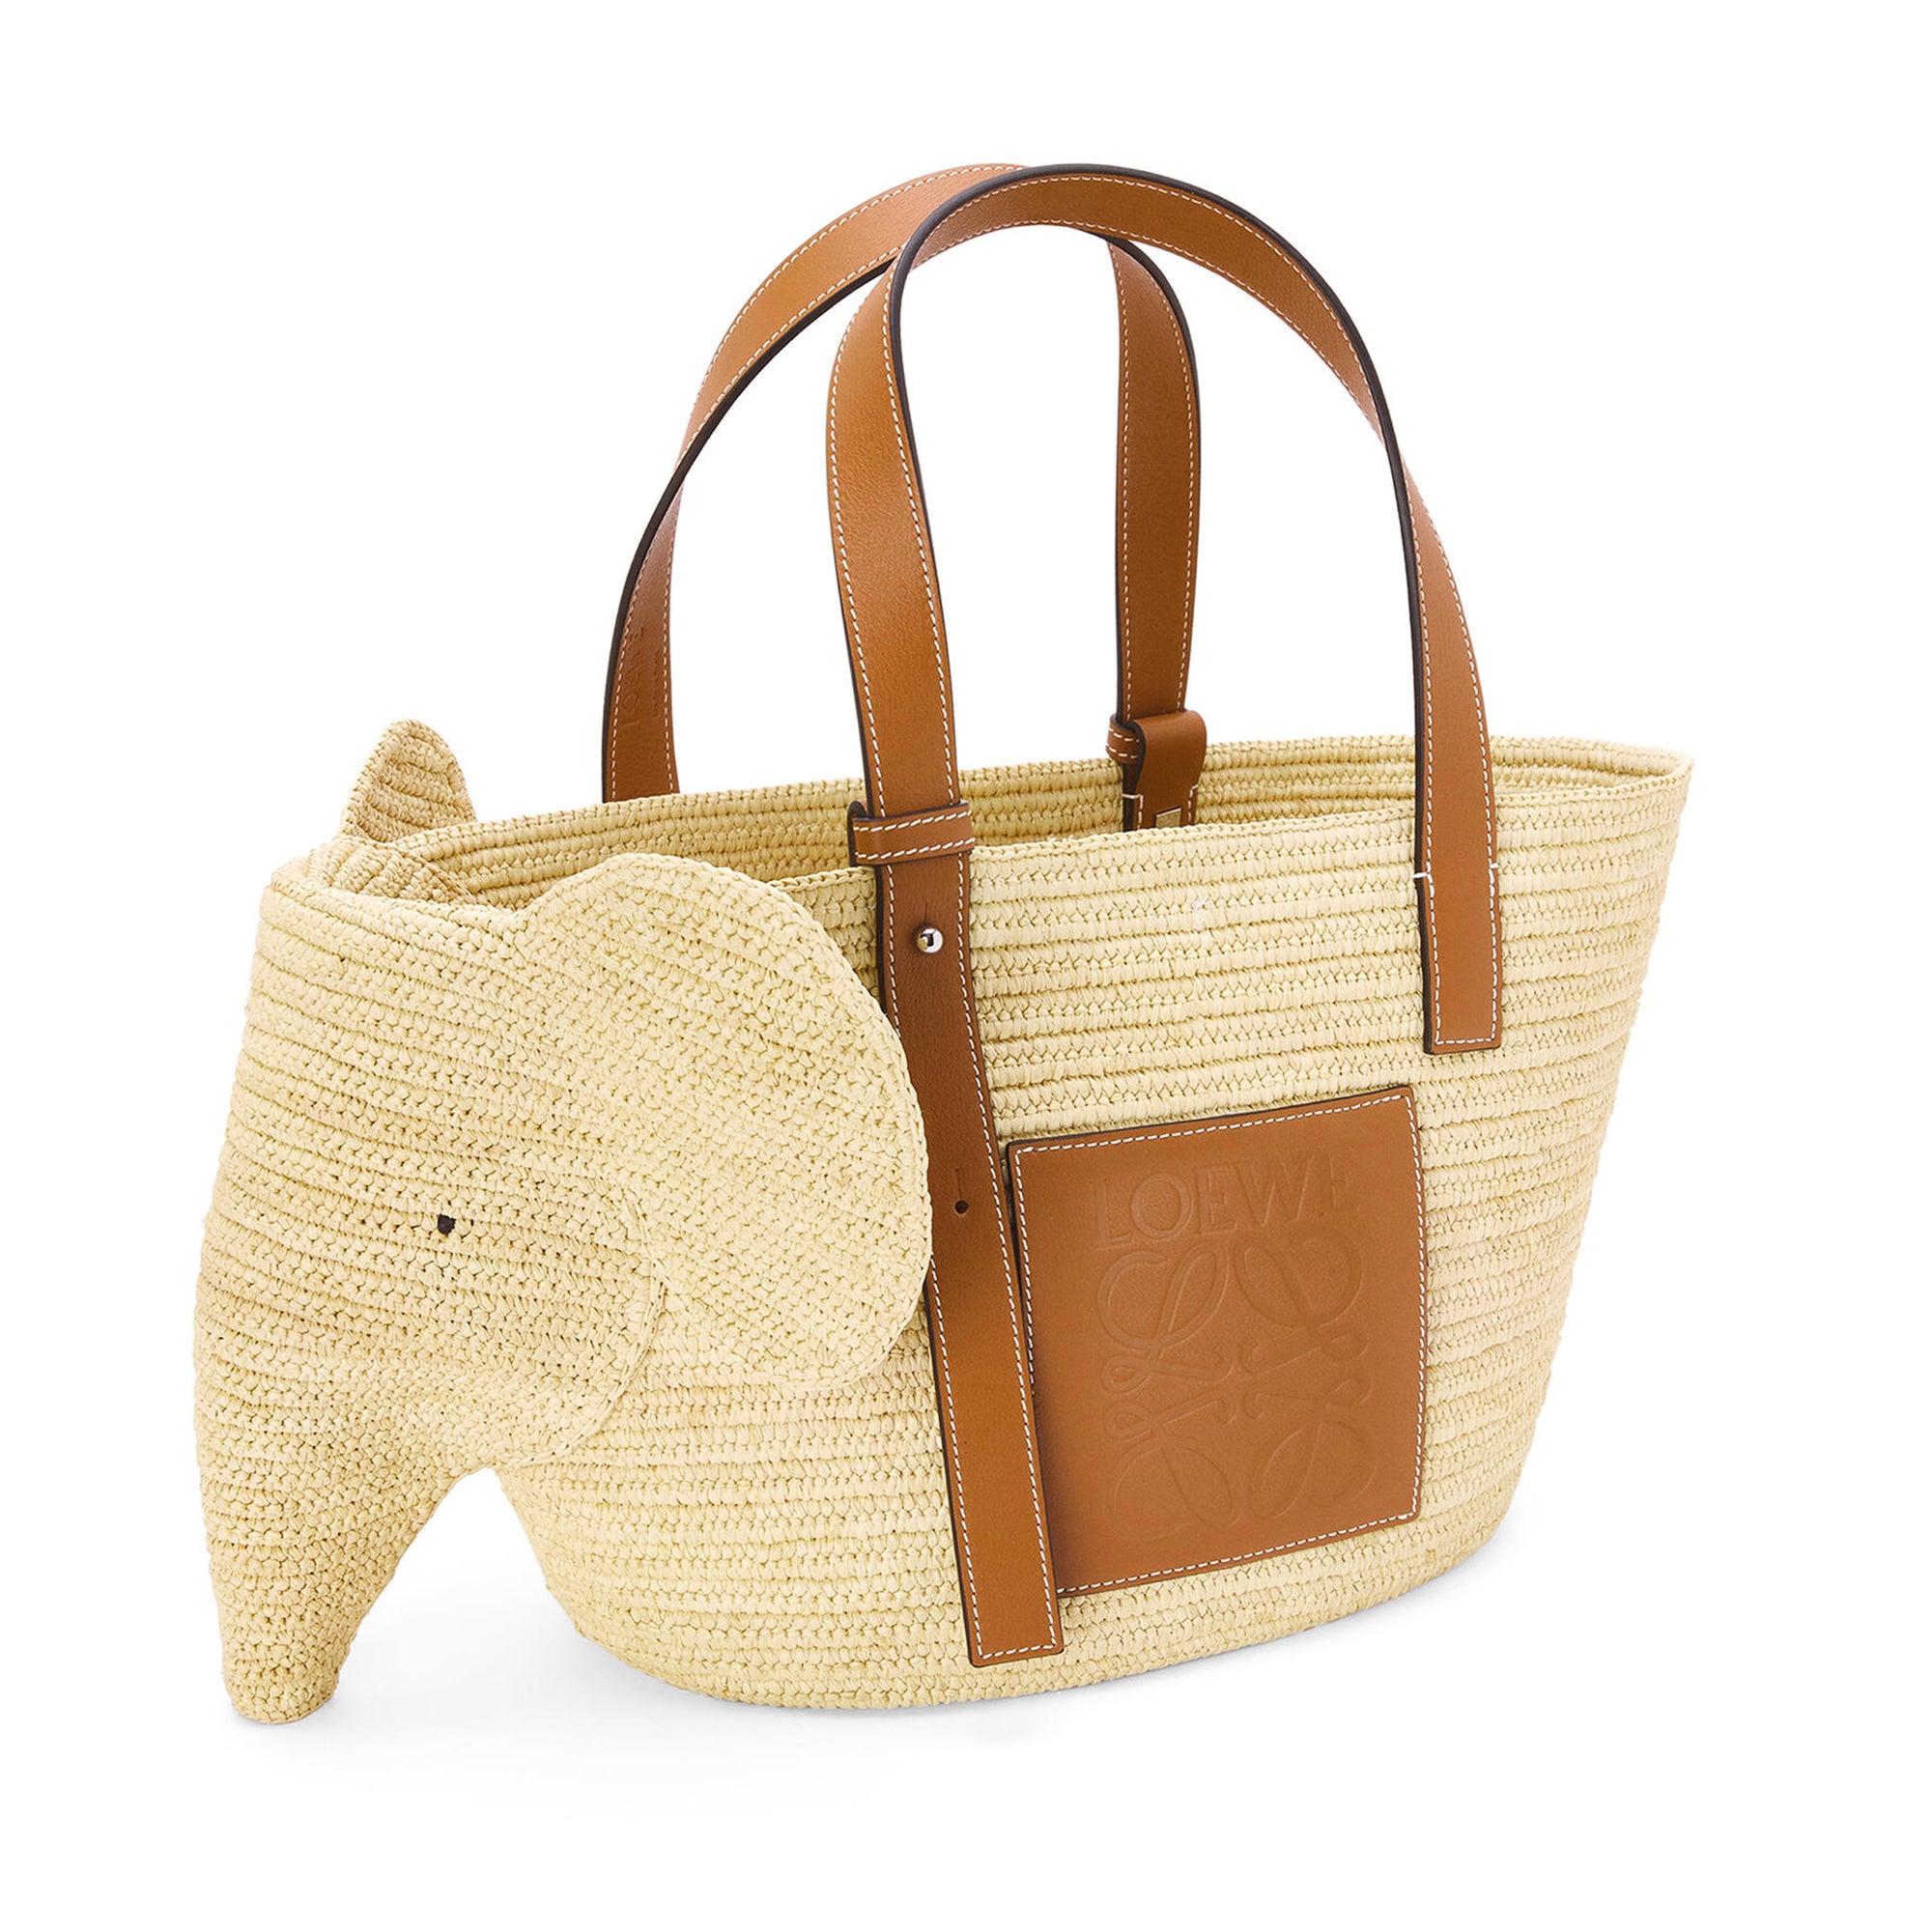 Loewe - Women’s Elephant Basket Bag - (Natural/Tan) view 2